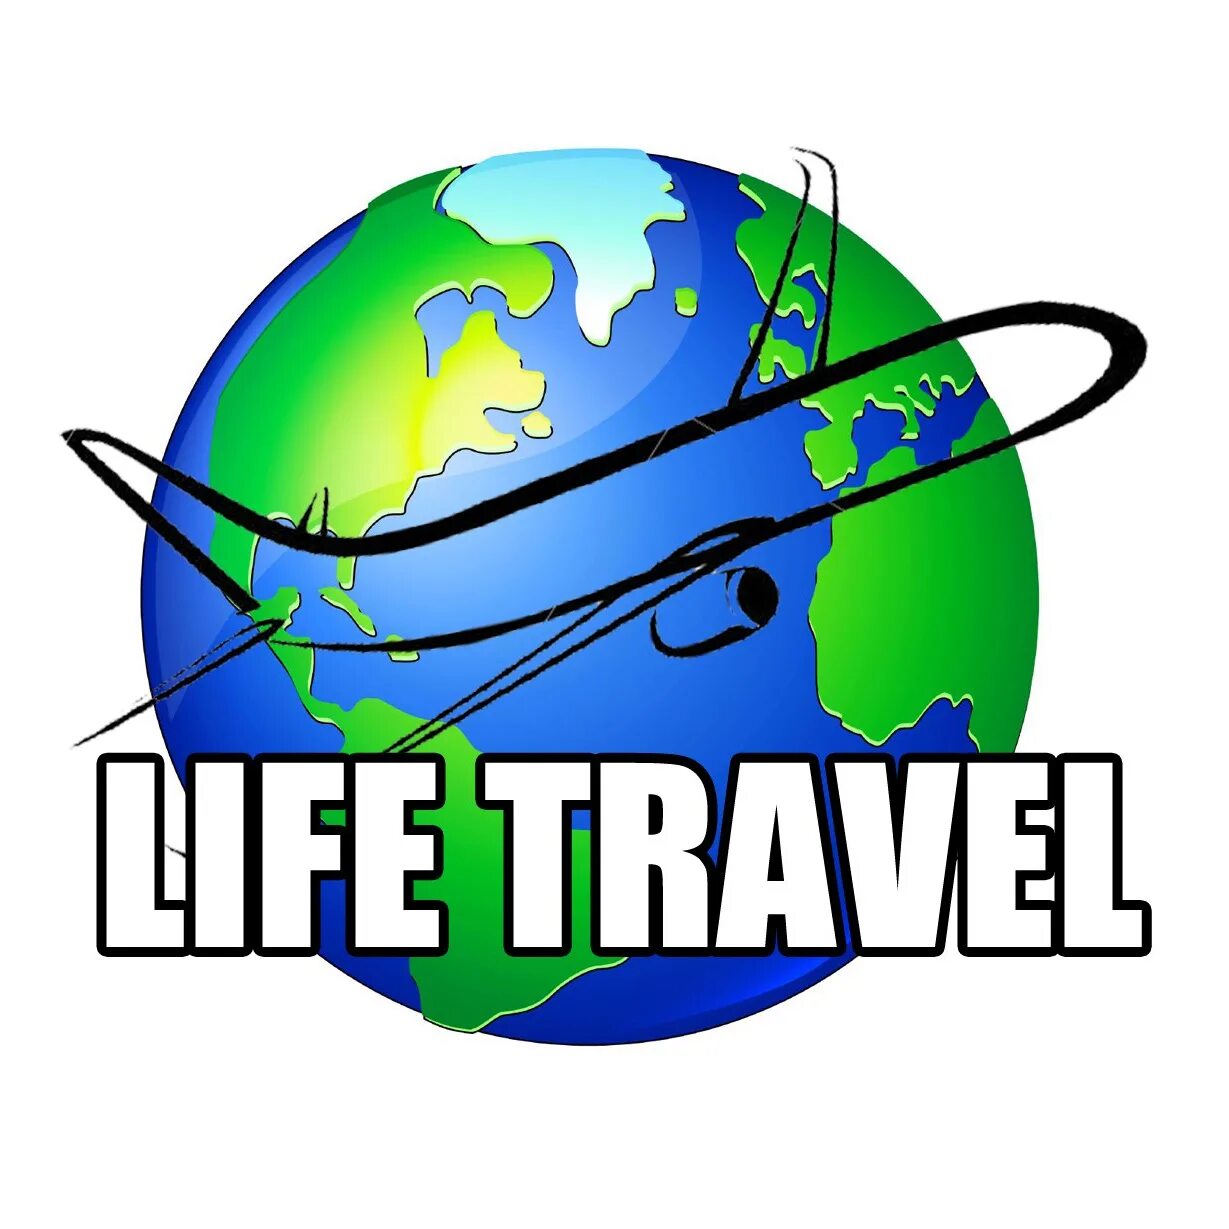 Travel 4 life. Лайф Тревел. Туристическое агентство лайф Тревел. Лайф Тревел логотип. Тревел лайф экологическая организация.